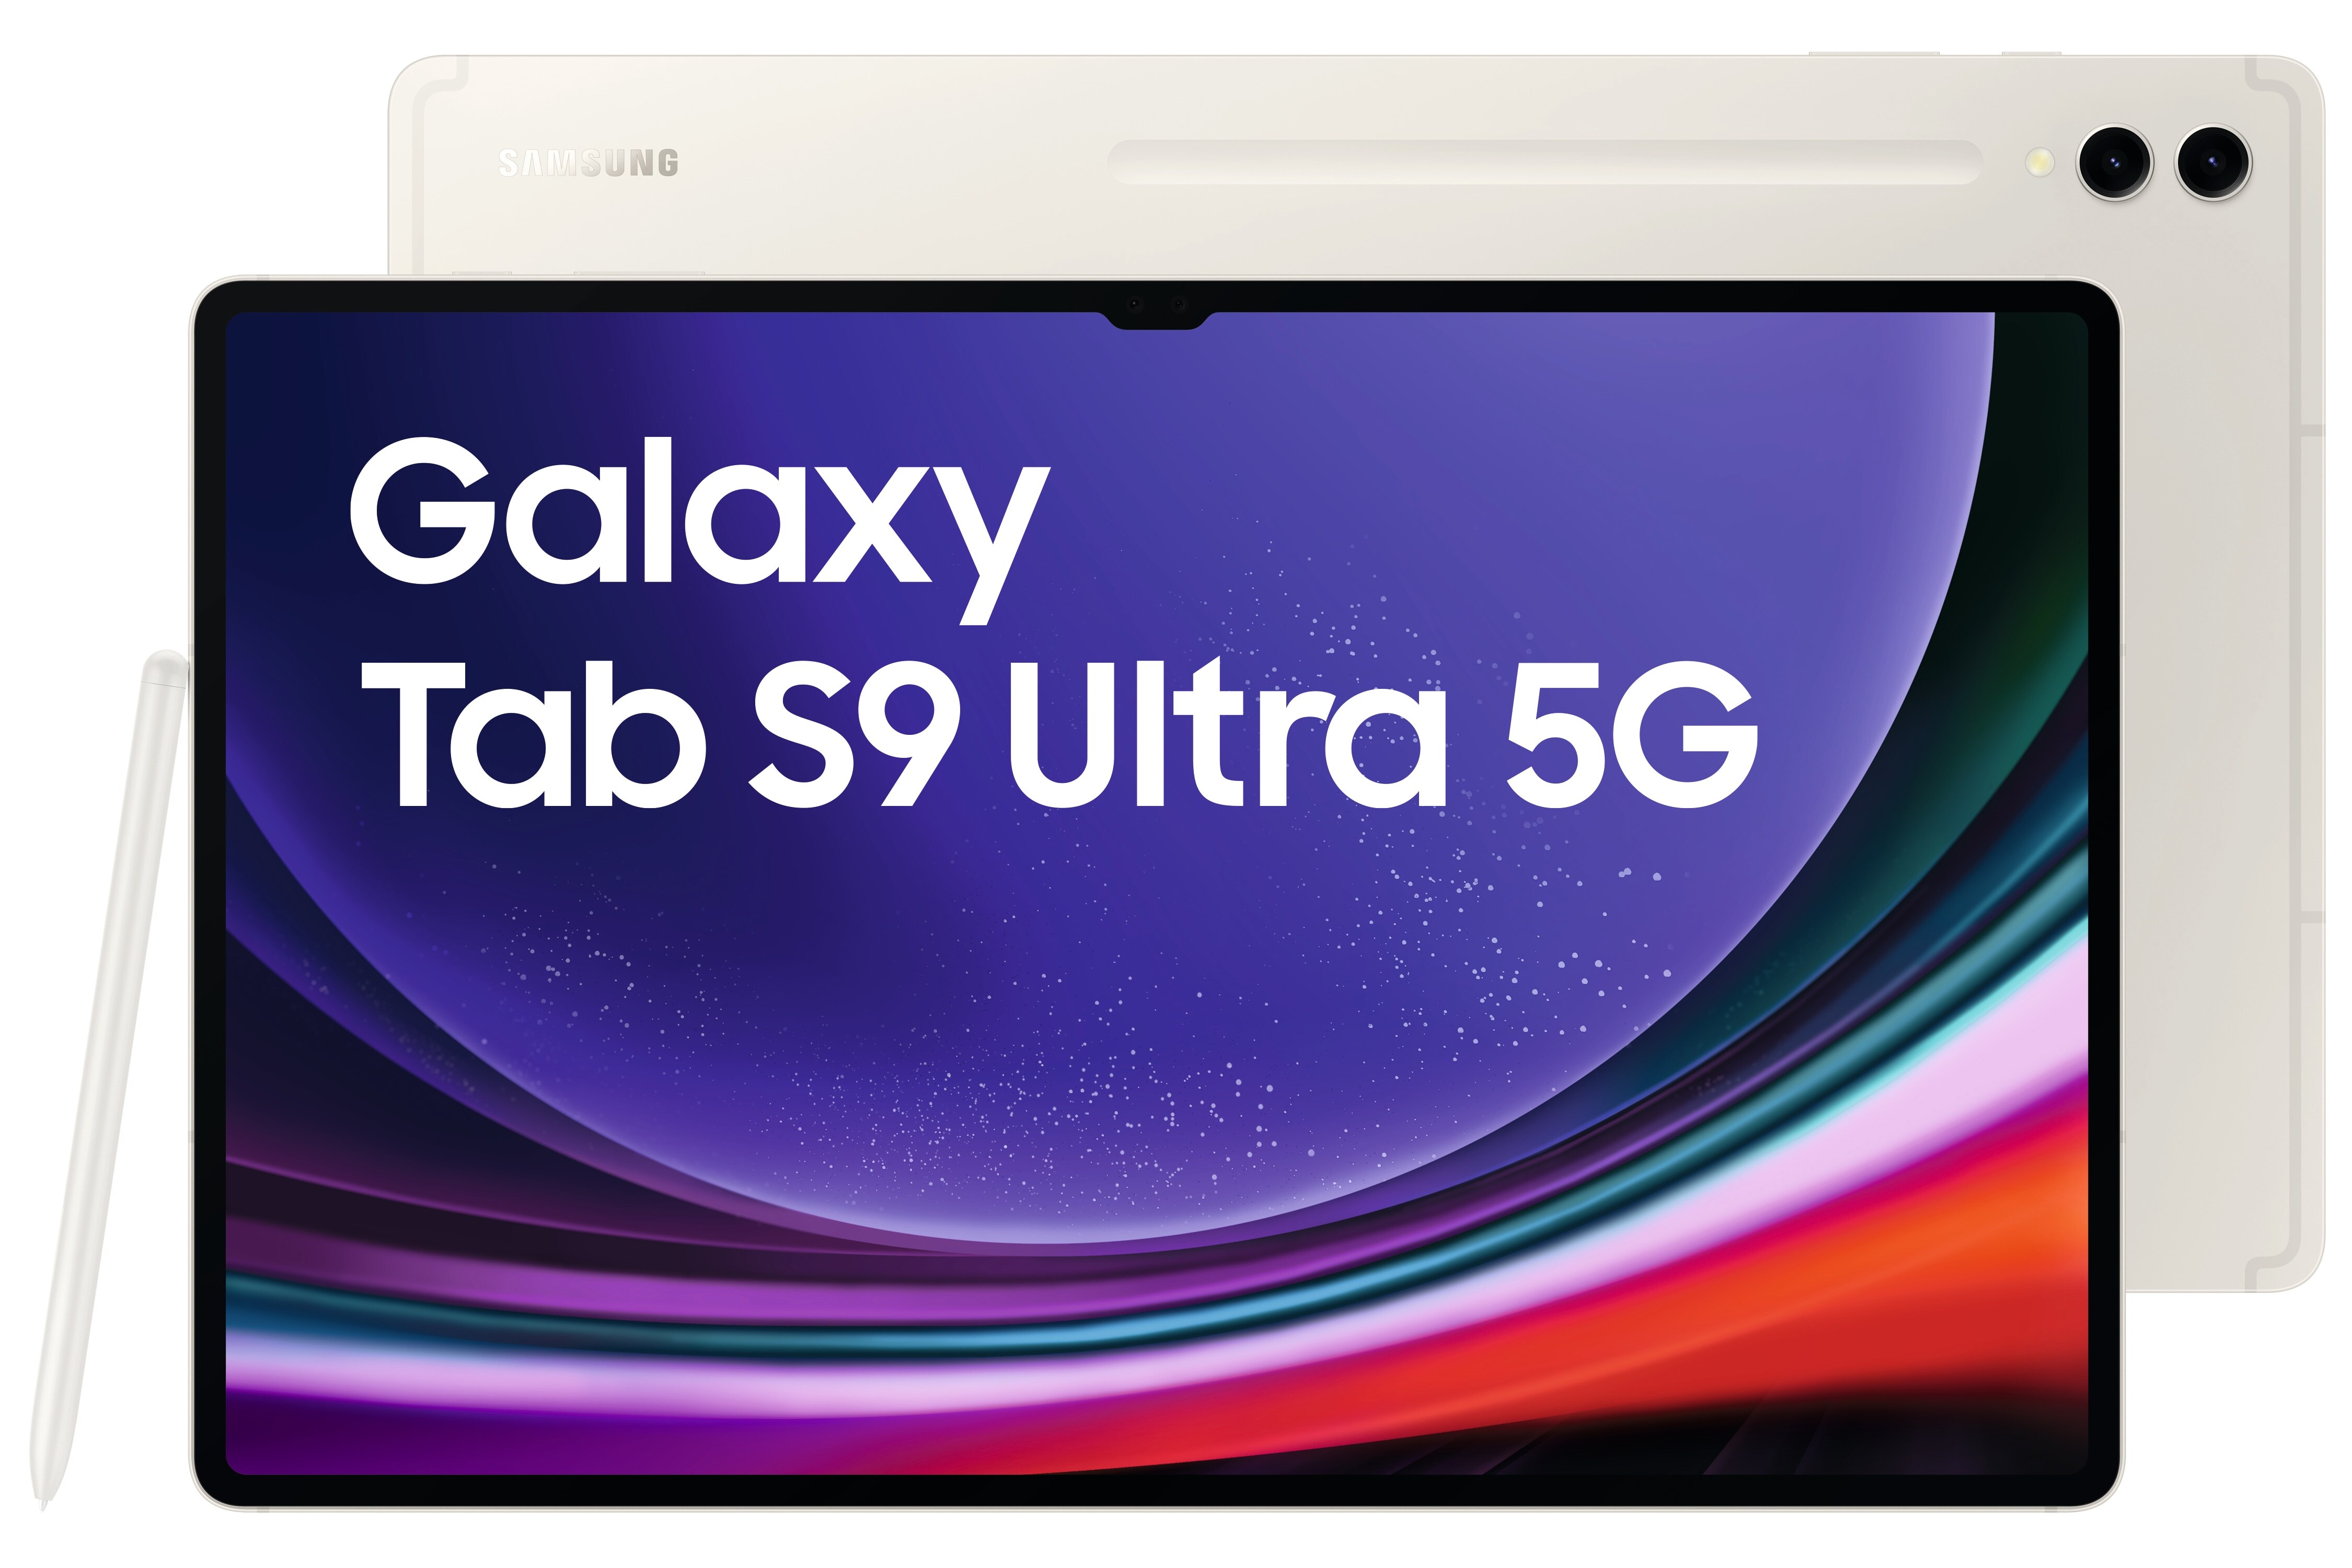 beige Tablet X916B ++ S9 Ultra 5G Tab Cyberport 1TB Samsung 13.0 Android GALAXY